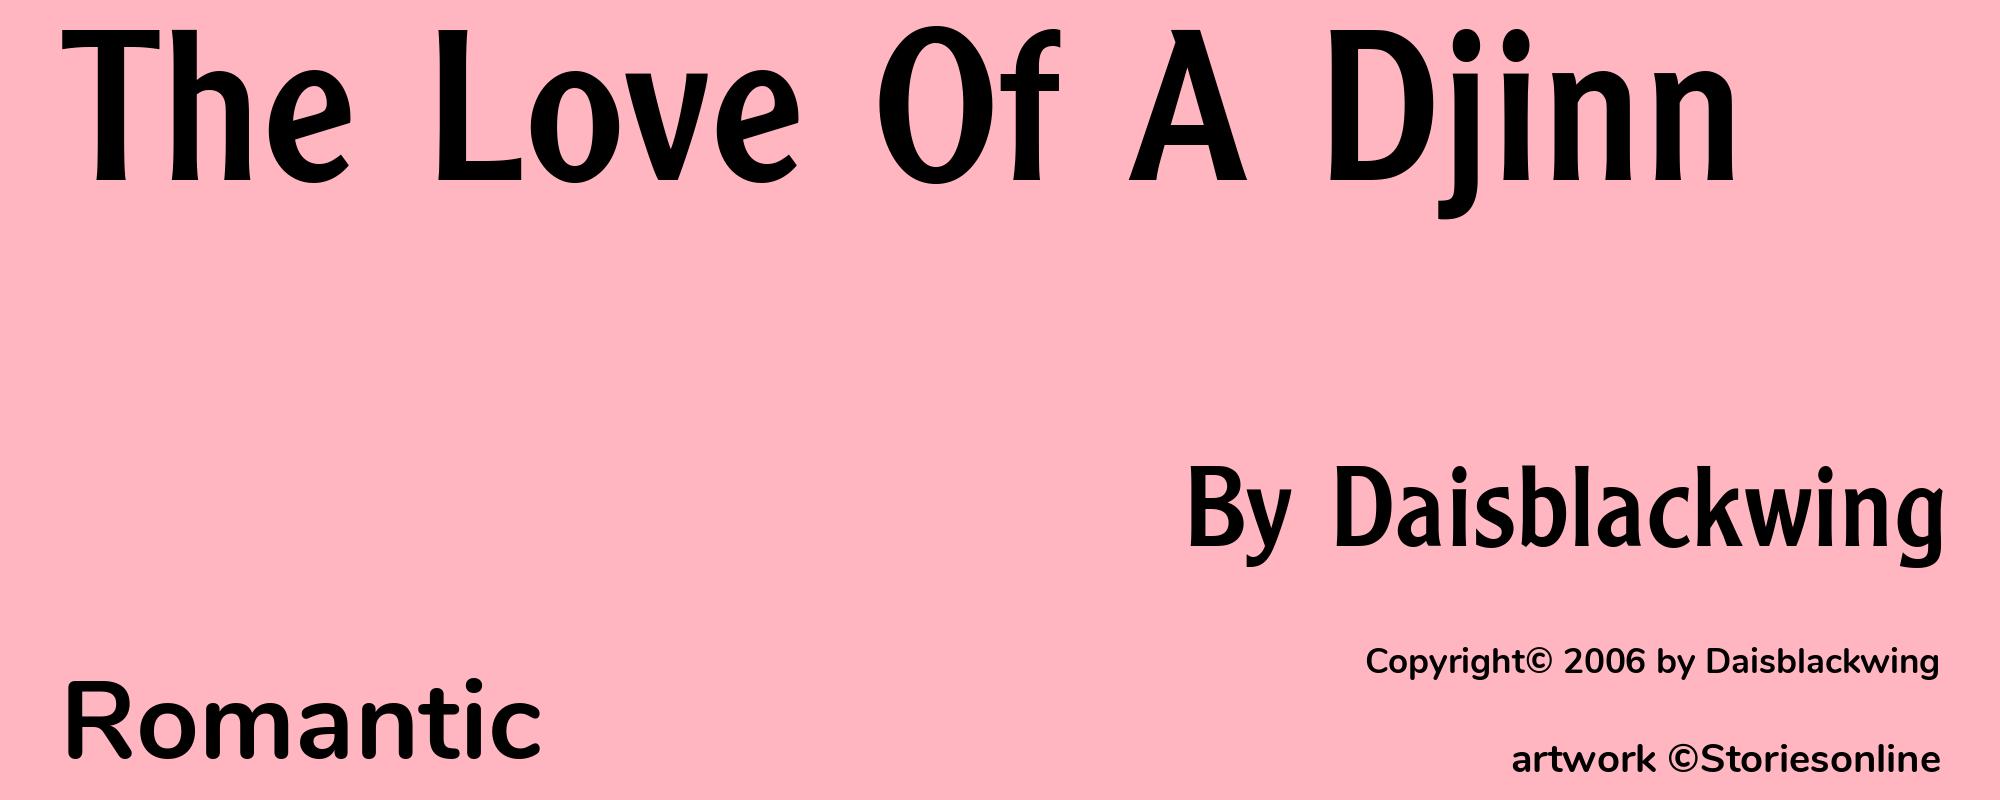 The Love Of A Djinn - Cover